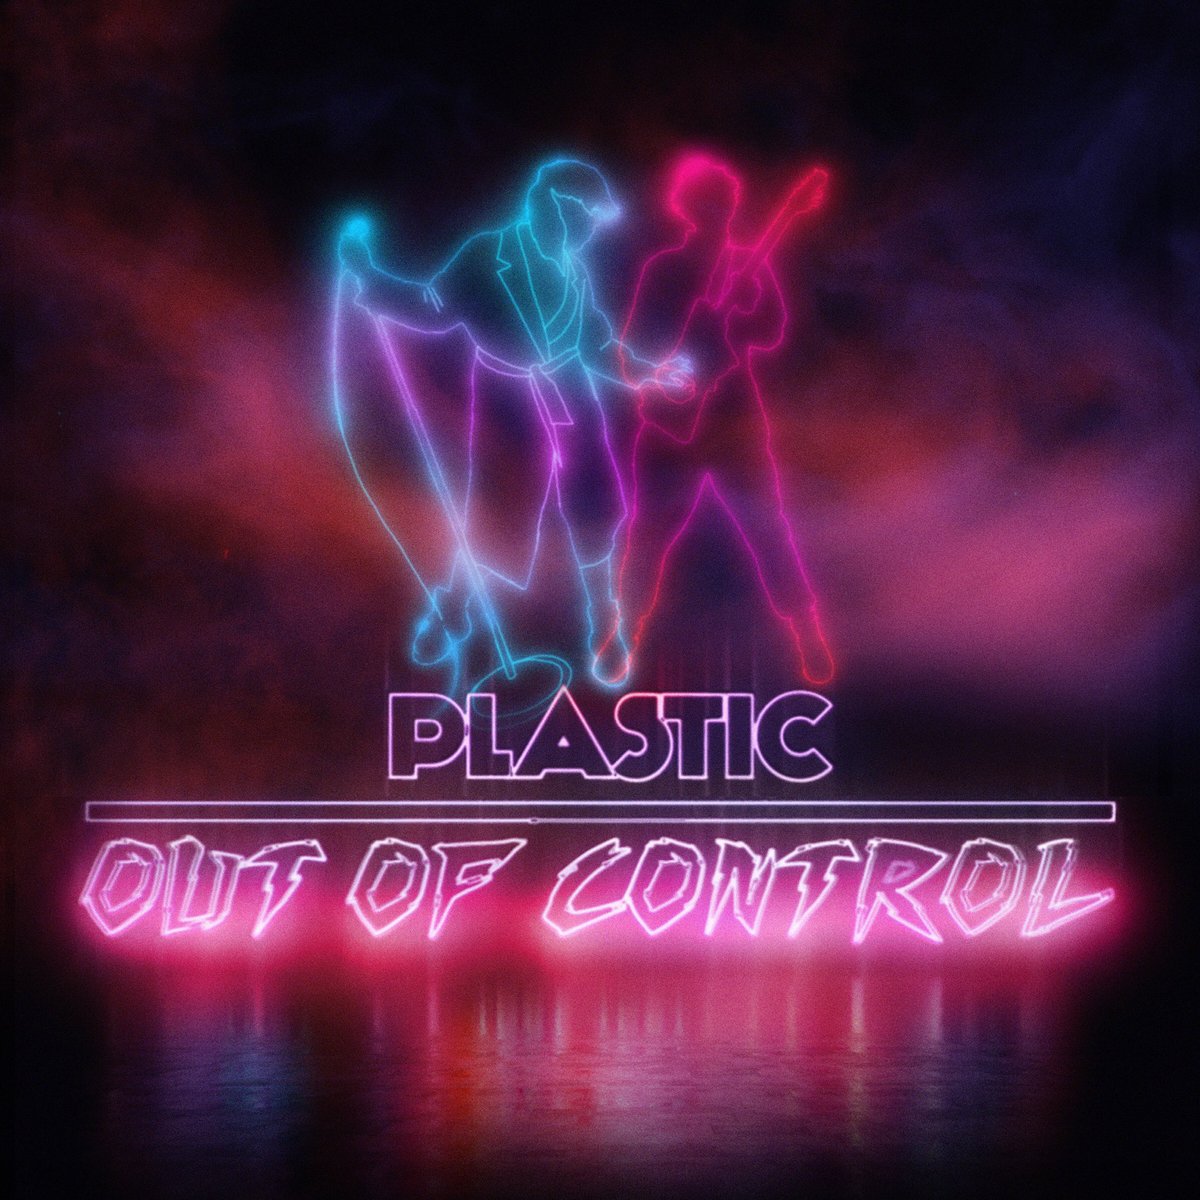 Premiera nowego singla #Plastic “Out Of Control” już w ten piątek 18.10.2019! #outofcontrol #nowapiosenka #NewMusic #NewMusicFriday #NewMusicAlert #polskiartysta #polskamuzyka #premiera #plasticspace